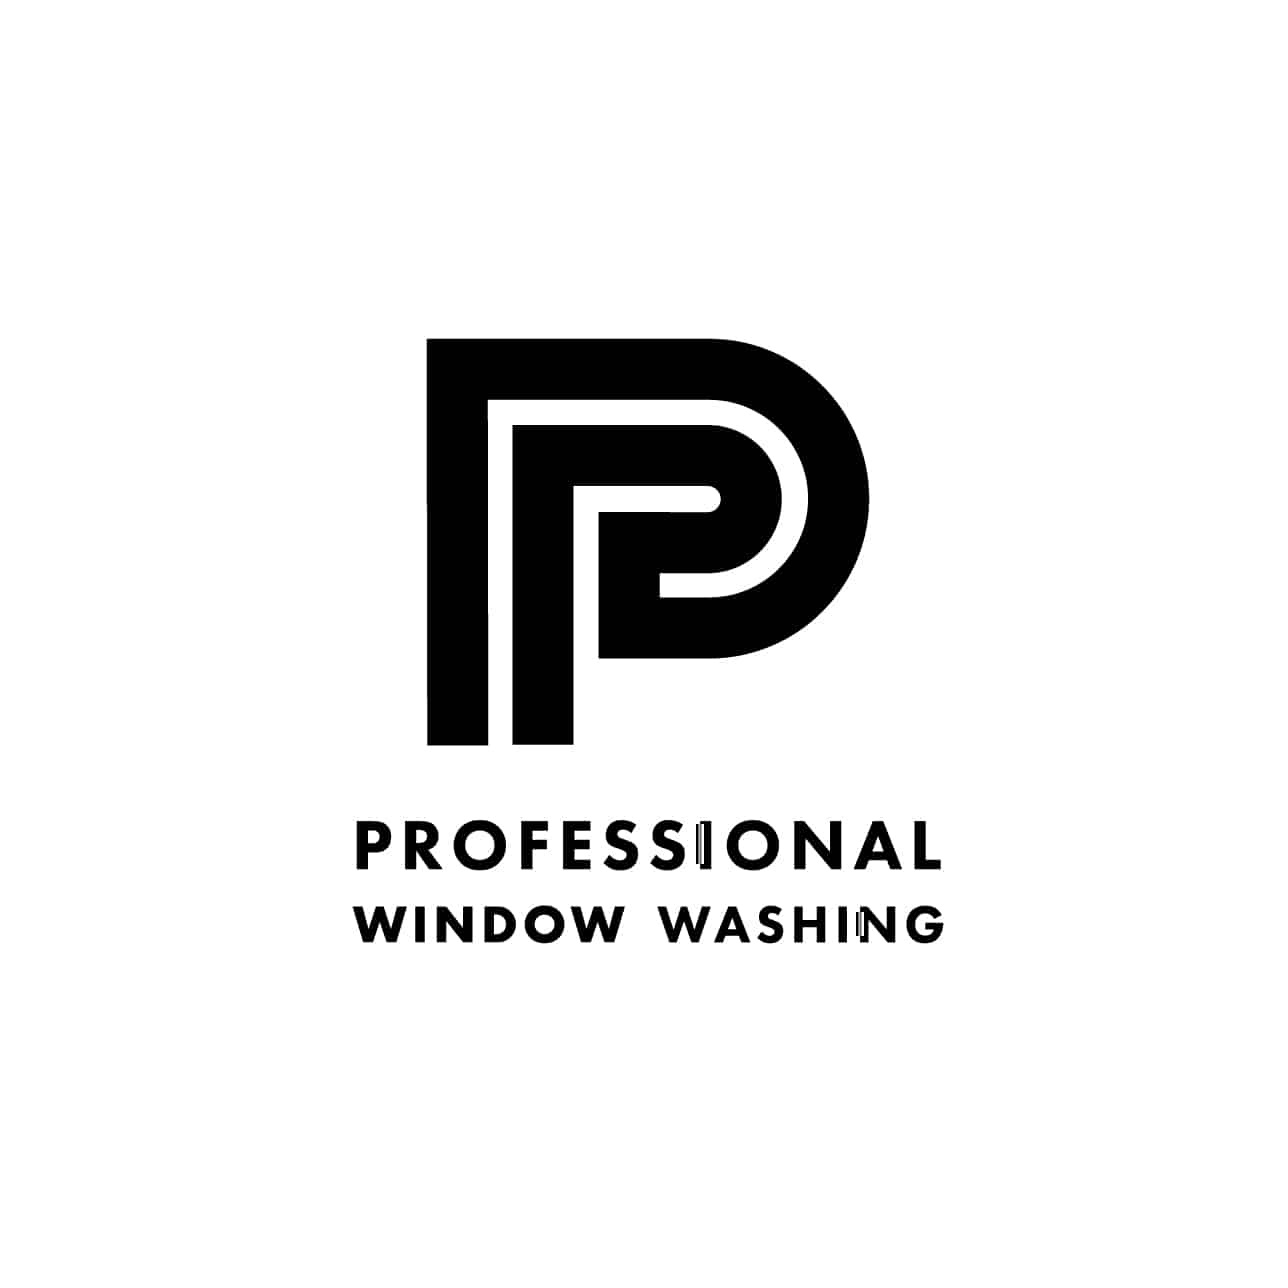 Professional Window Washing Logo by Stellen Design Logo Design Agency in Los Angeles